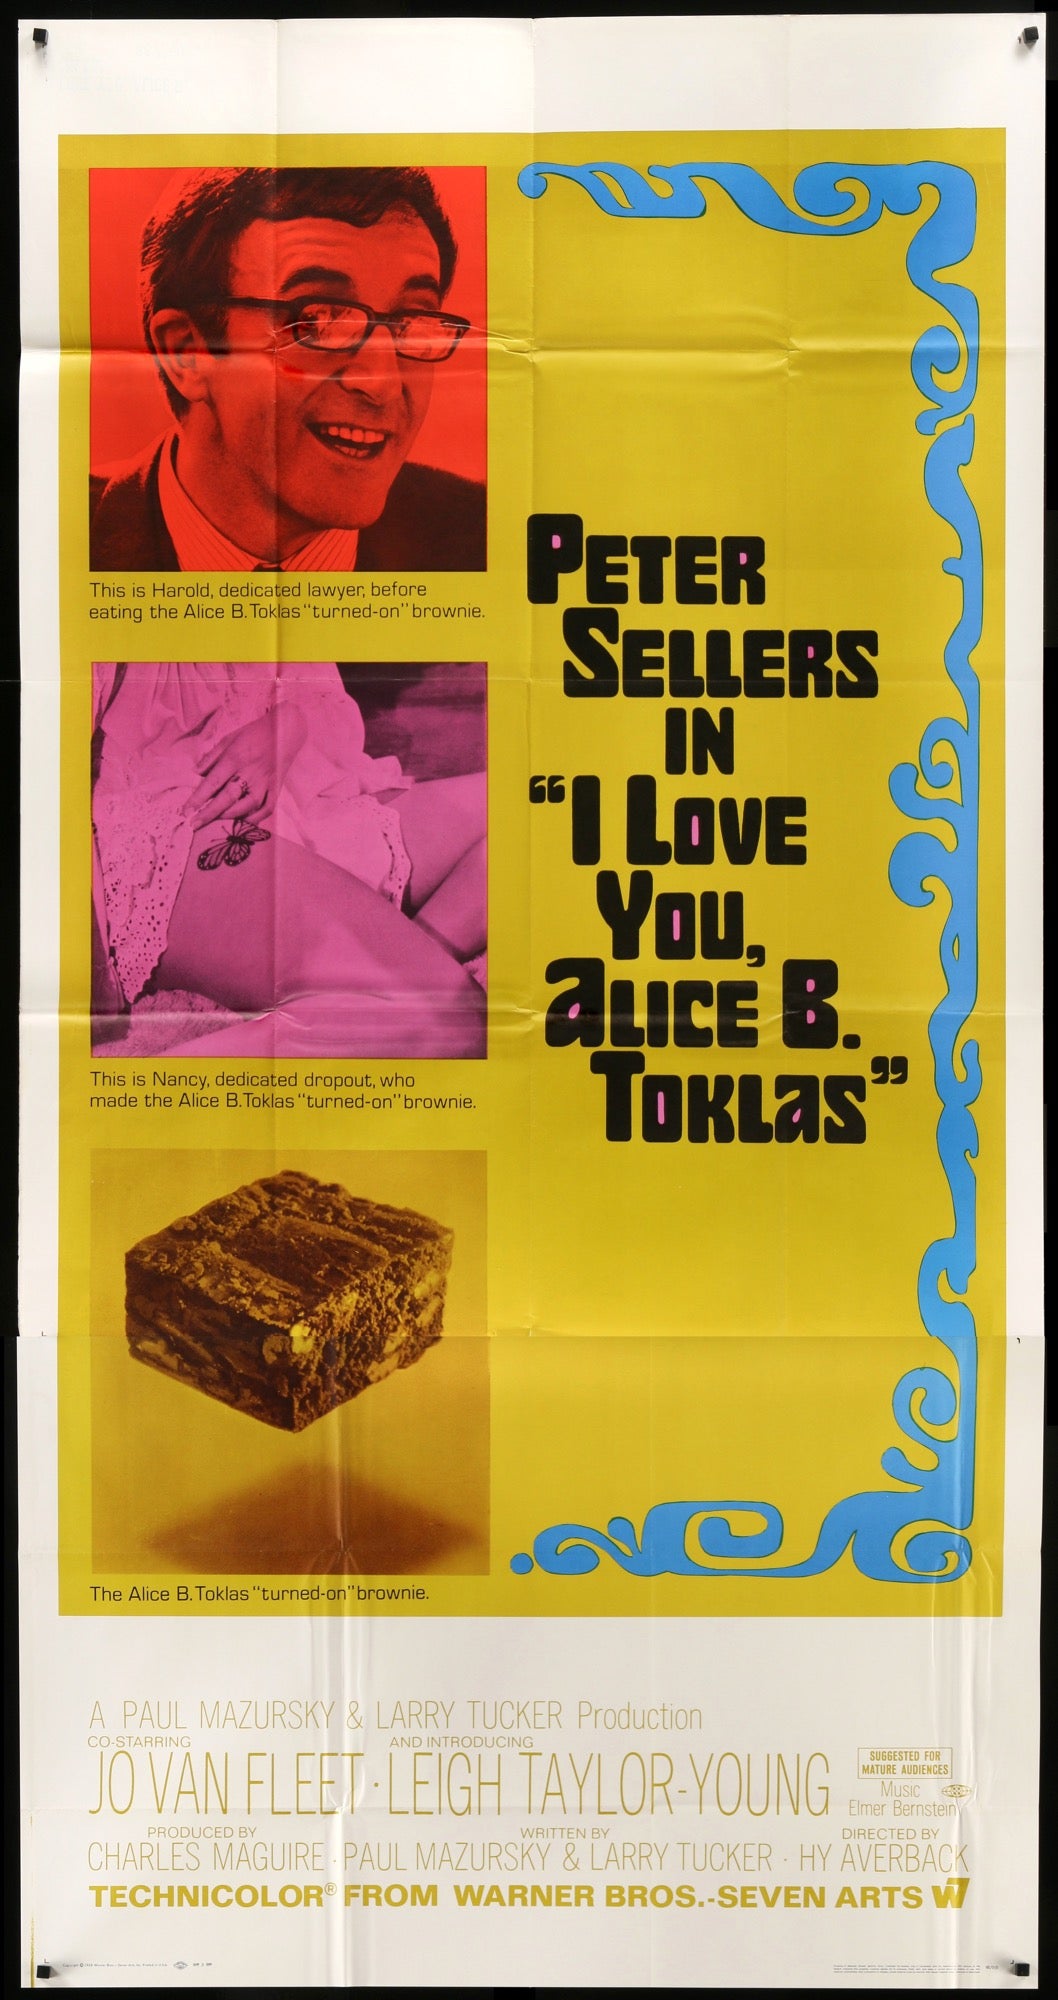 I Love You, Alice B. Toklas (1968) original movie poster for sale at Original Film Art